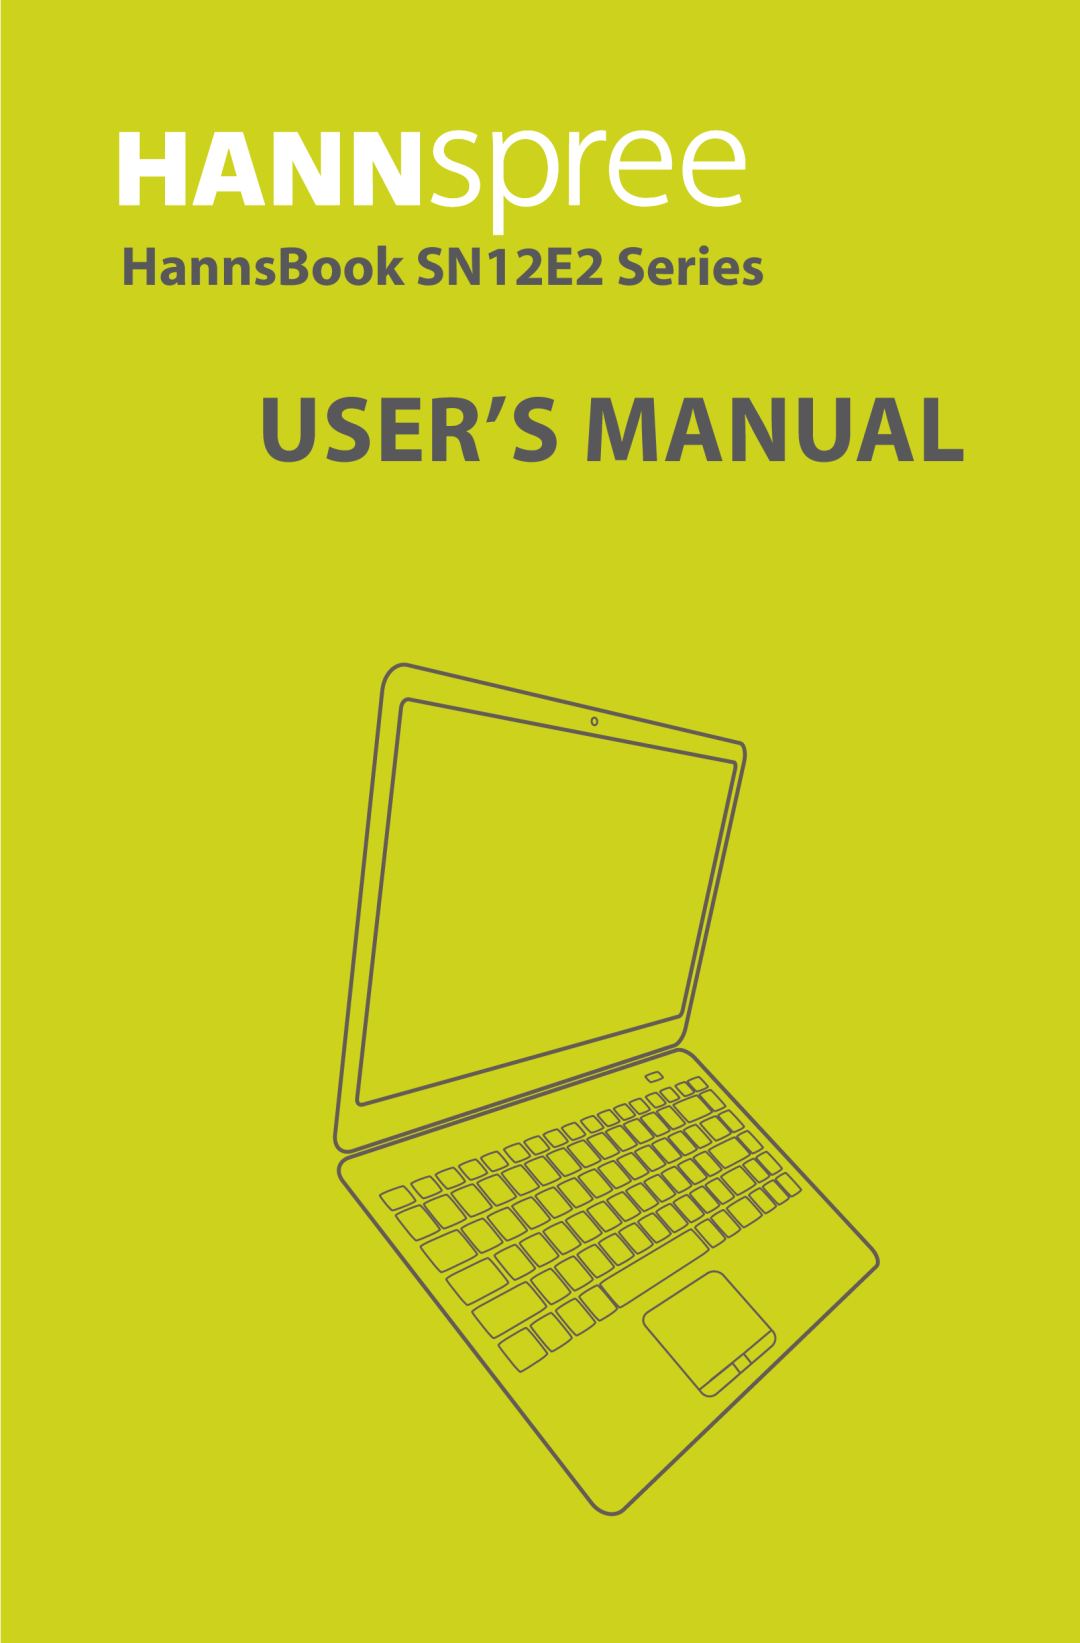 HANNspree manual User’S Manual, HannsBook SN12E2 Series 